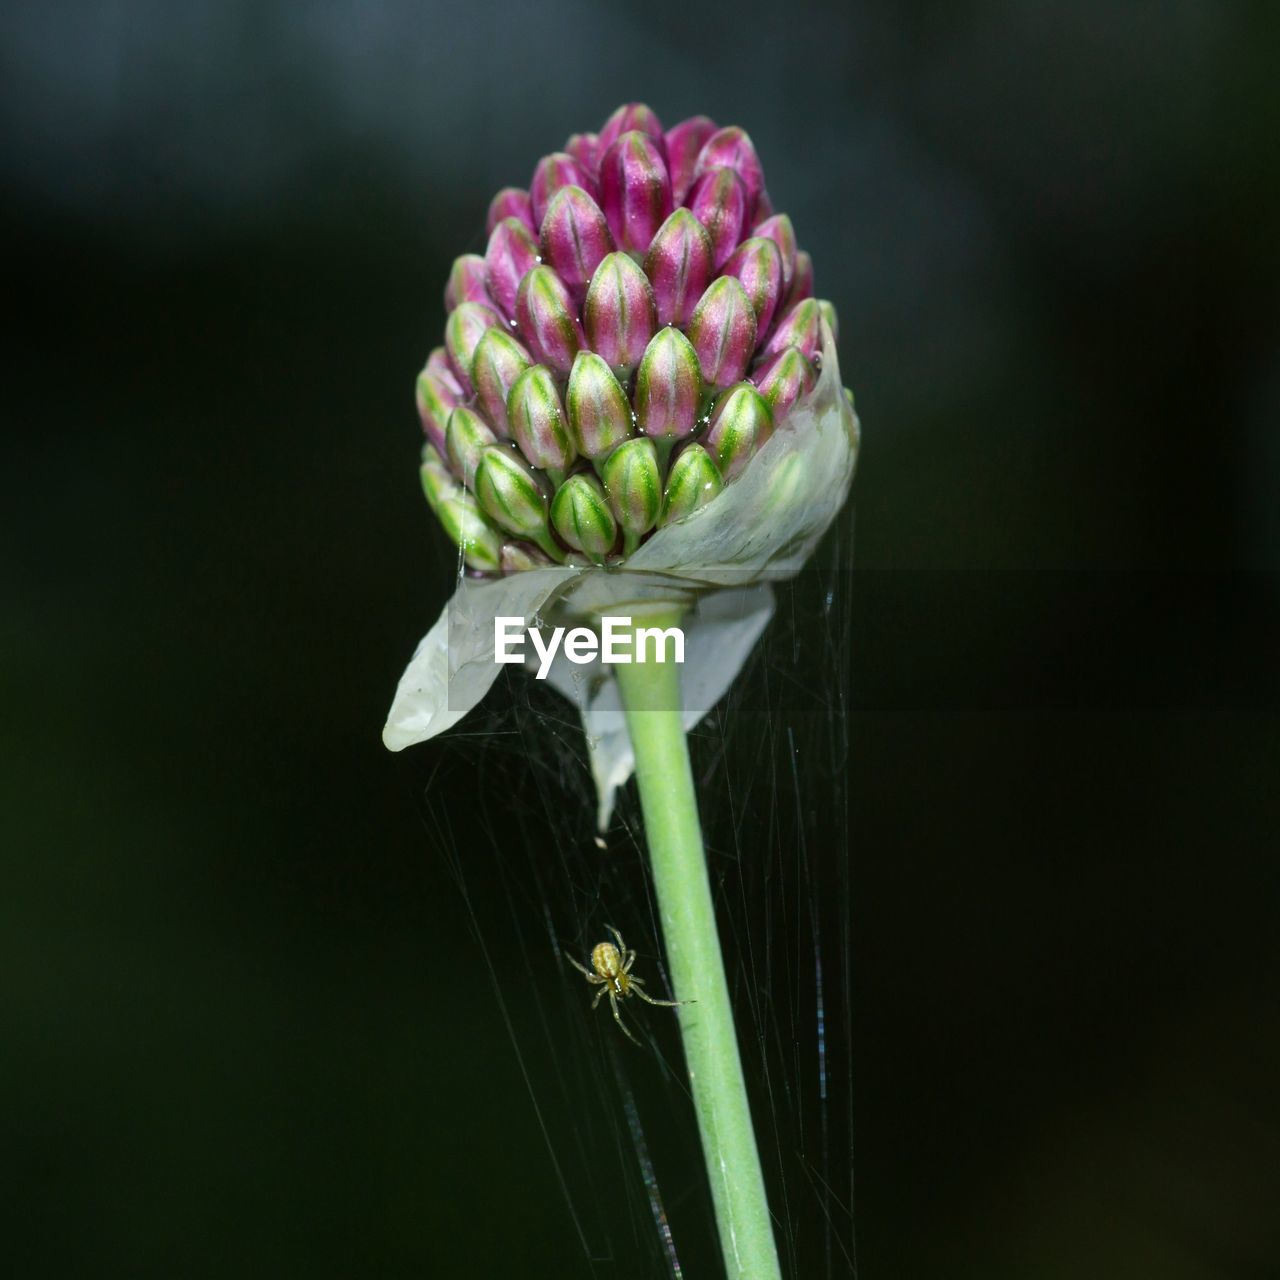 Closeup of ball-head onion wildflower, allium sphaerocephalon, with a spider hanging on its web